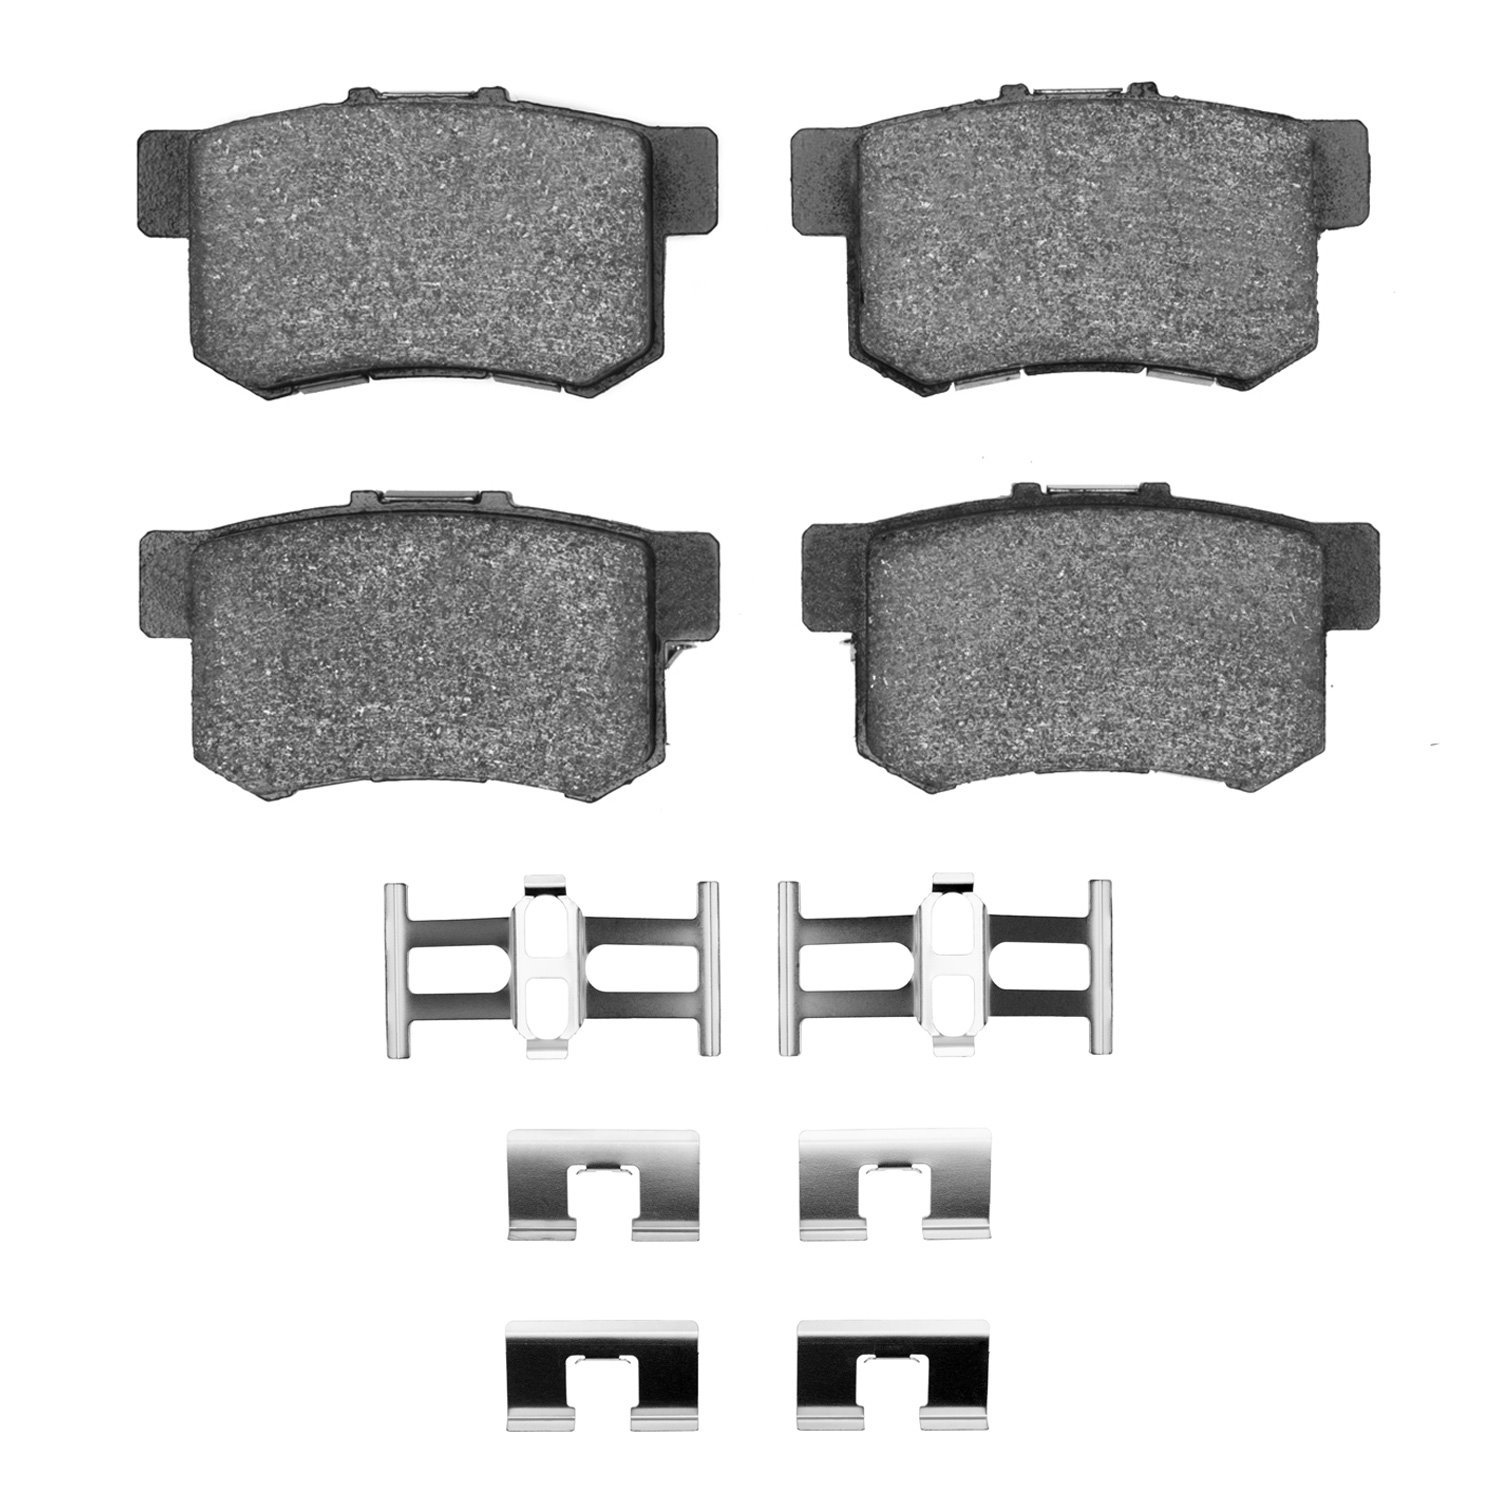 Performance Sport Brake Pads & Hardware Kit, Fits Select Fits Multiple Makes/Models, Position: Rear